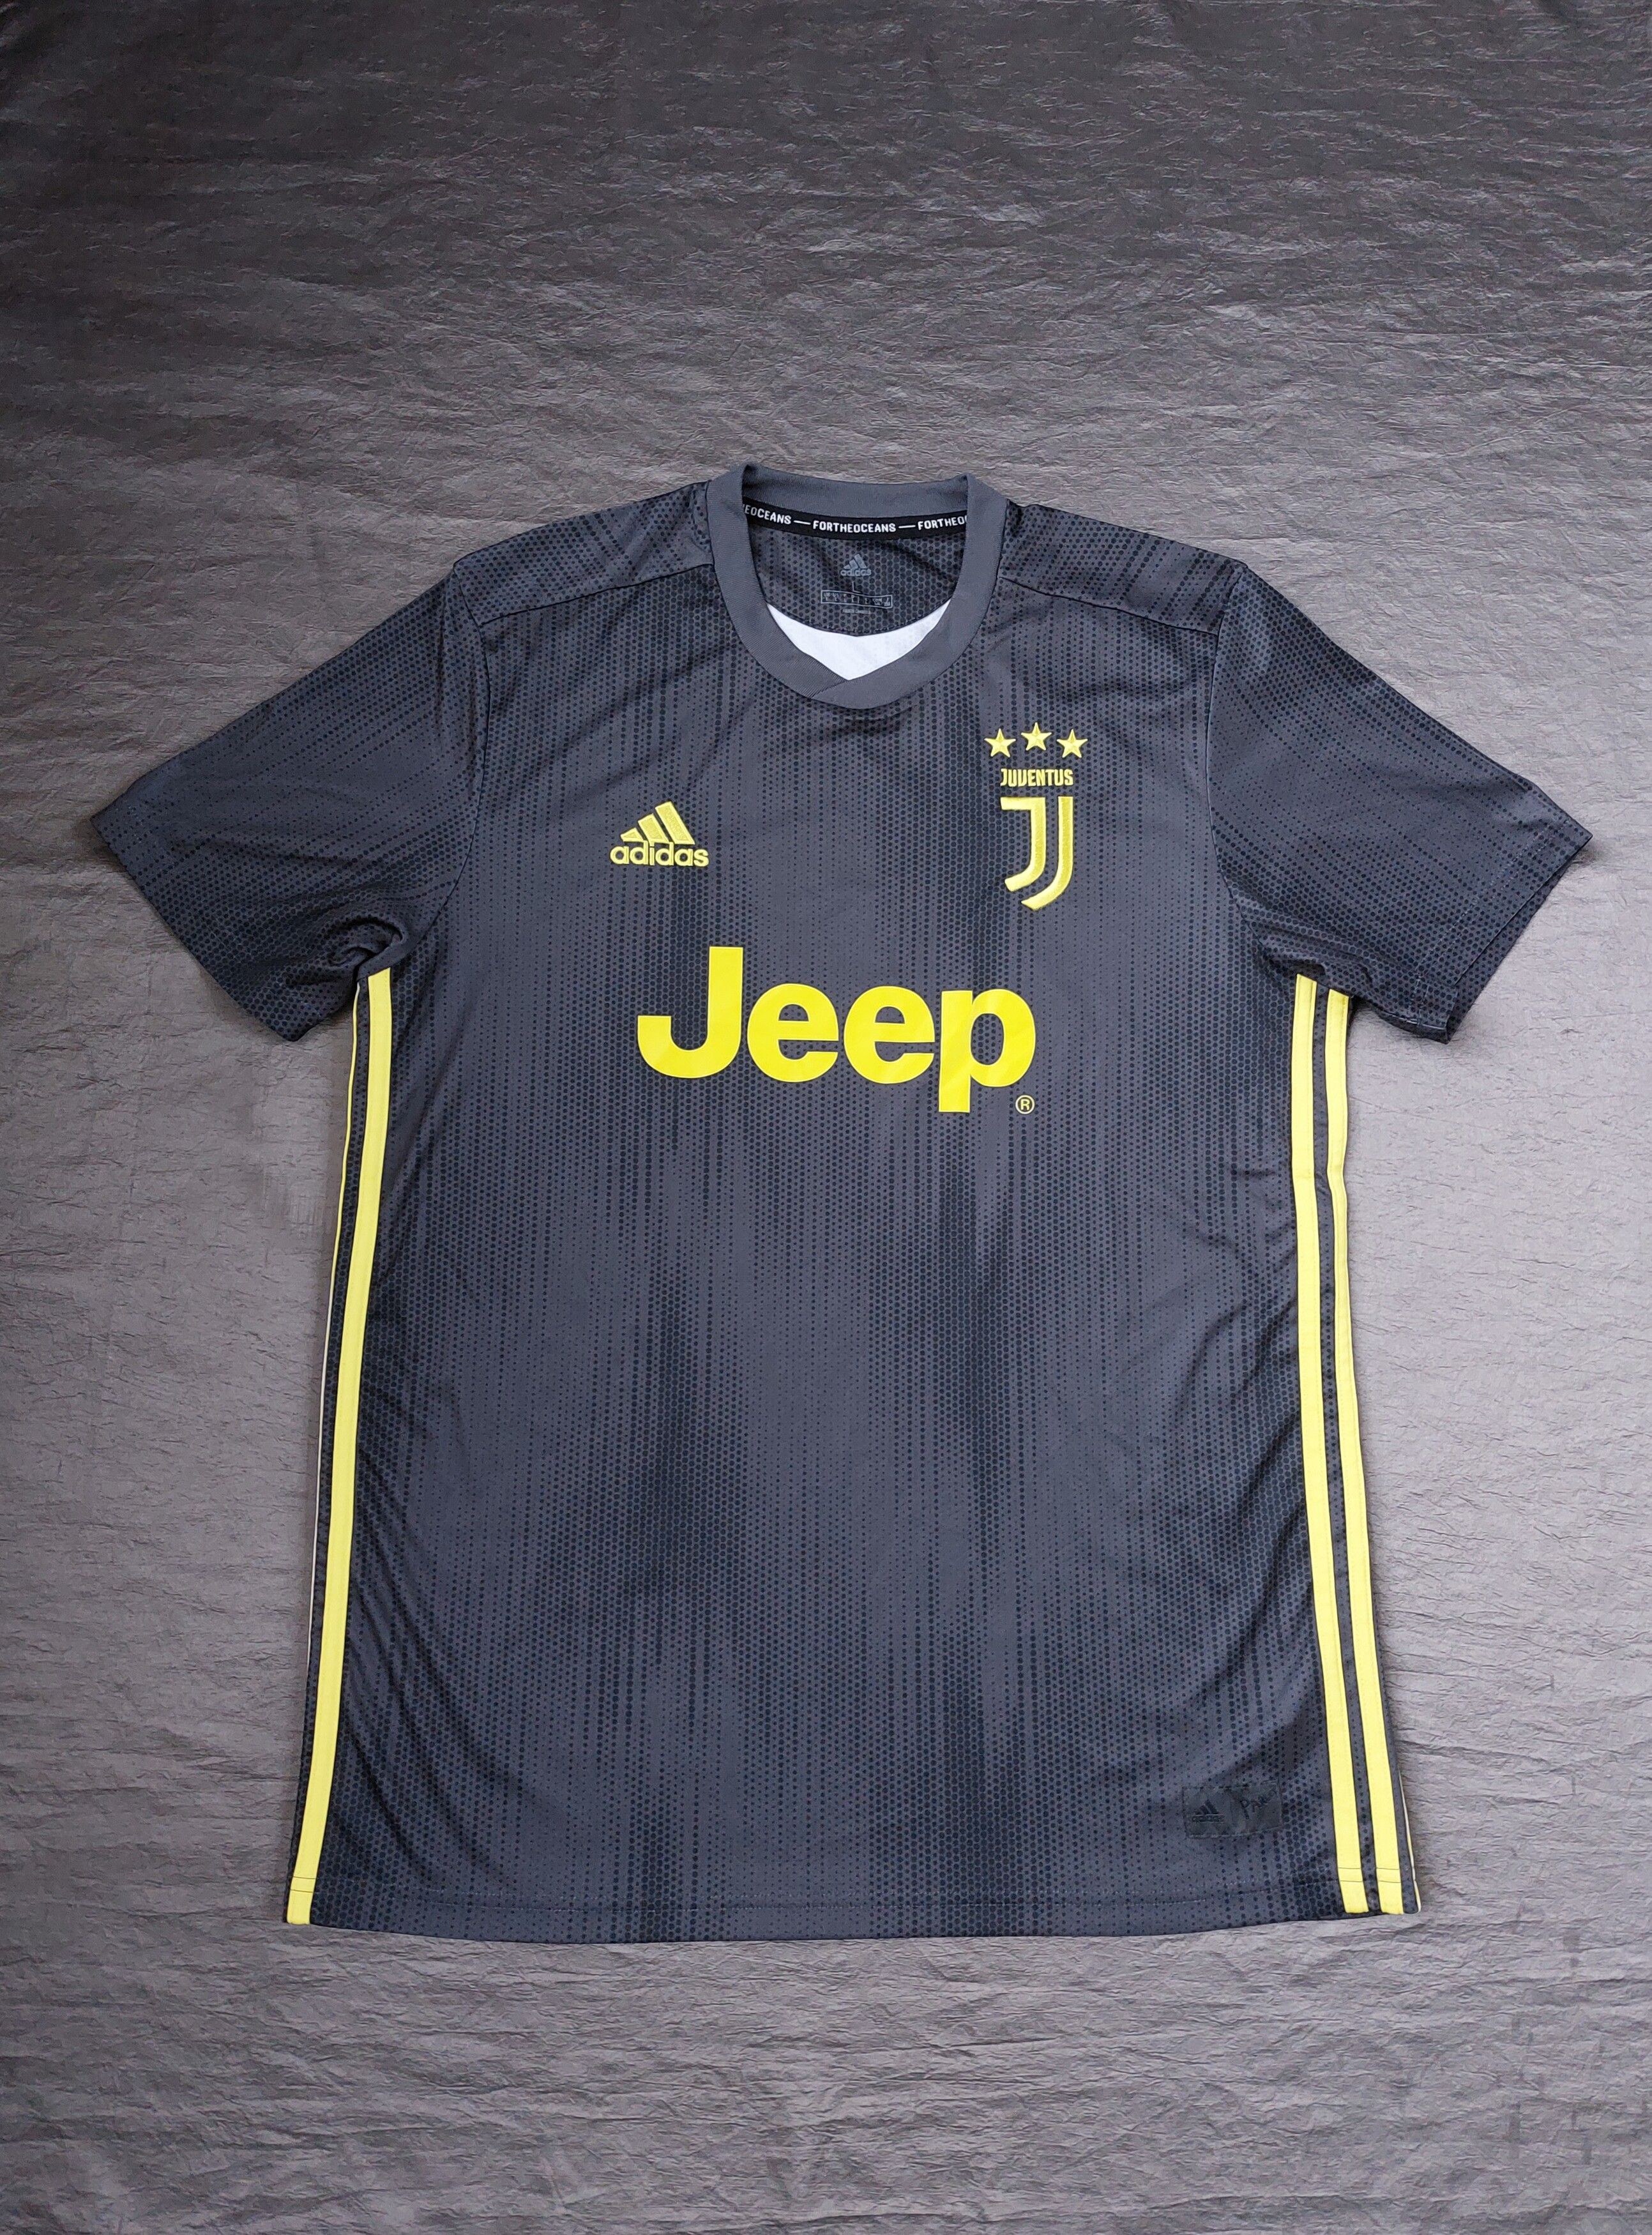 Adidas Adidas x Parley Juventus Jeep Jersey Mens Size M Size US L / EU 52-54 / 3 - 1 Preview